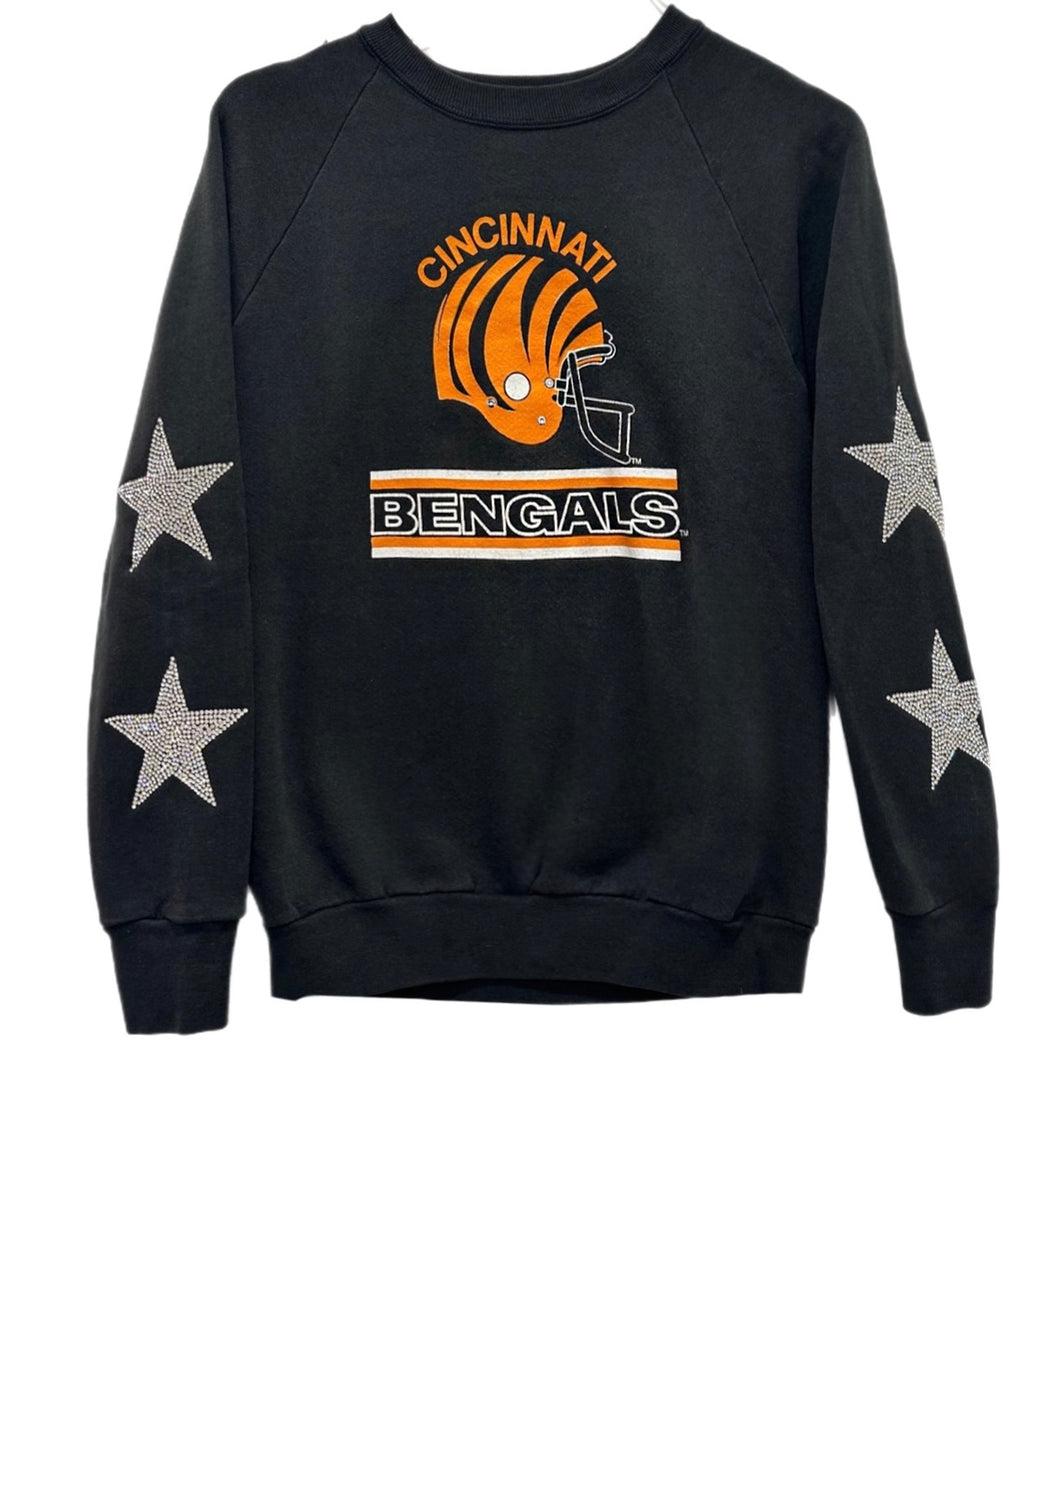 Cincinnati Bengals, NFL One of a KIND Vintage Sweatshirt with Crystal Star Design